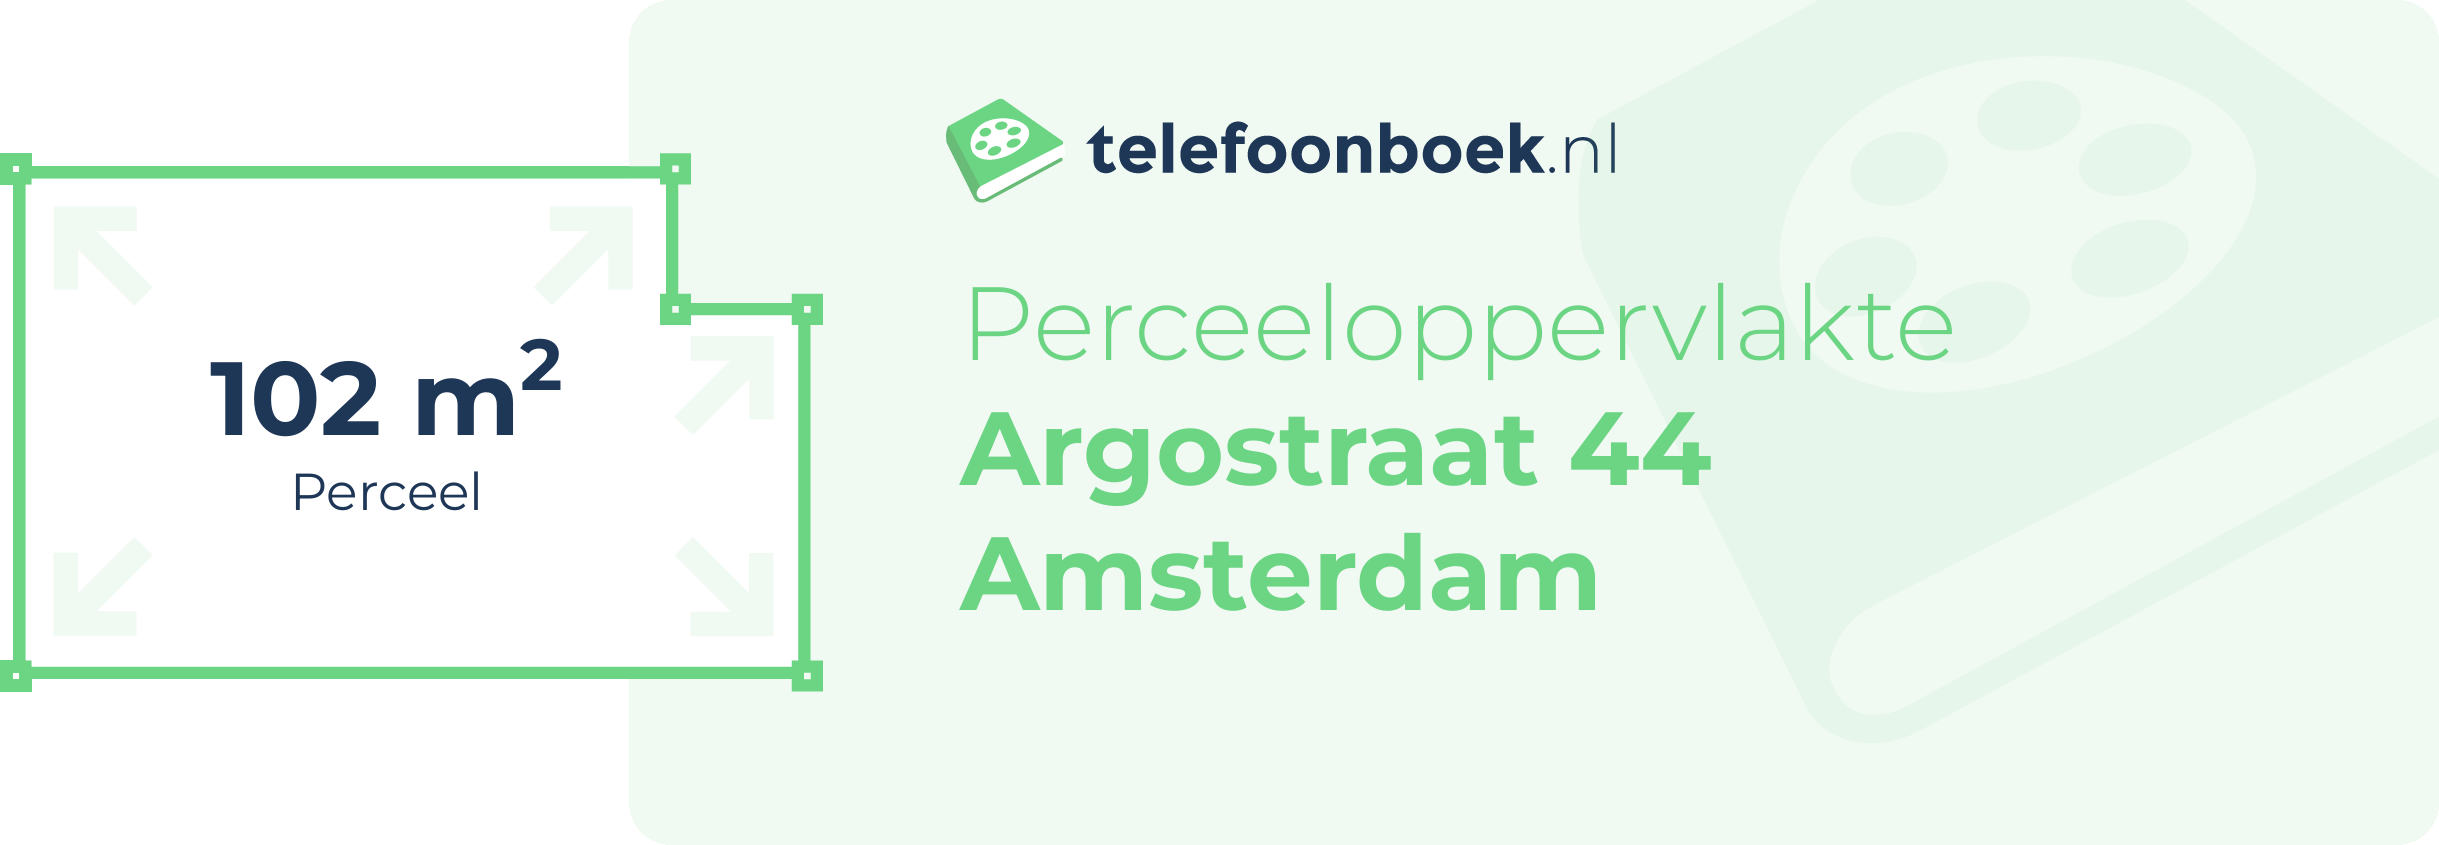 Perceeloppervlakte Argostraat 44 Amsterdam